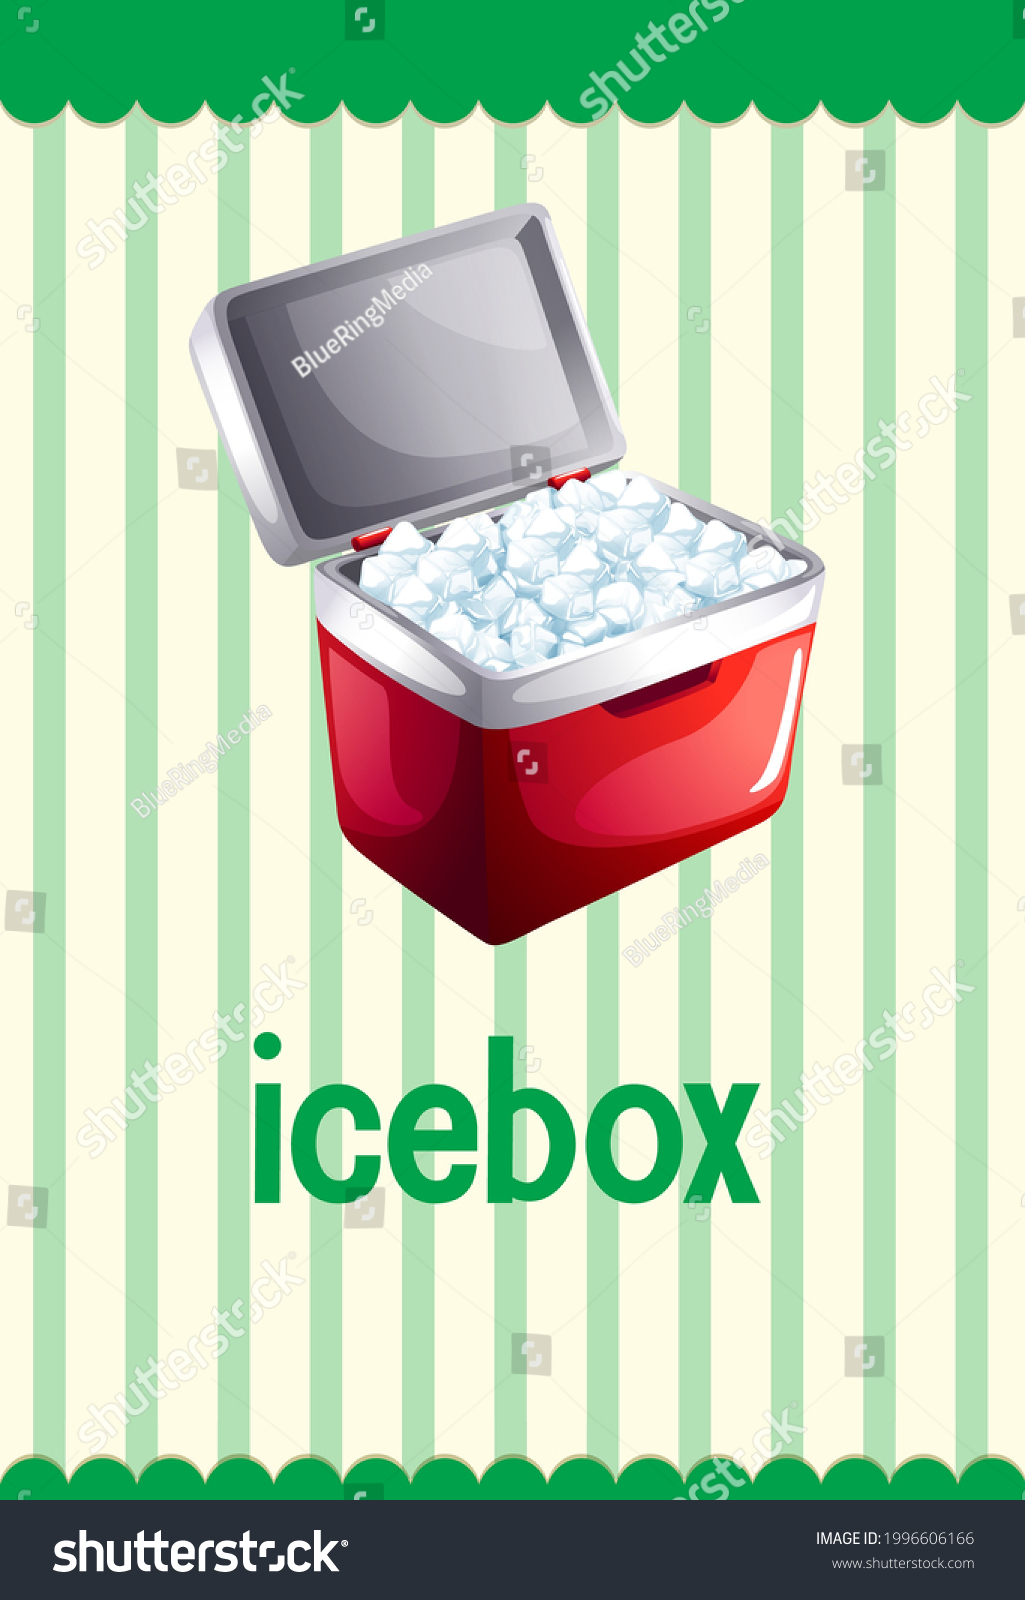 SVG of Vocabulary flashcard with word Icebox illustration svg